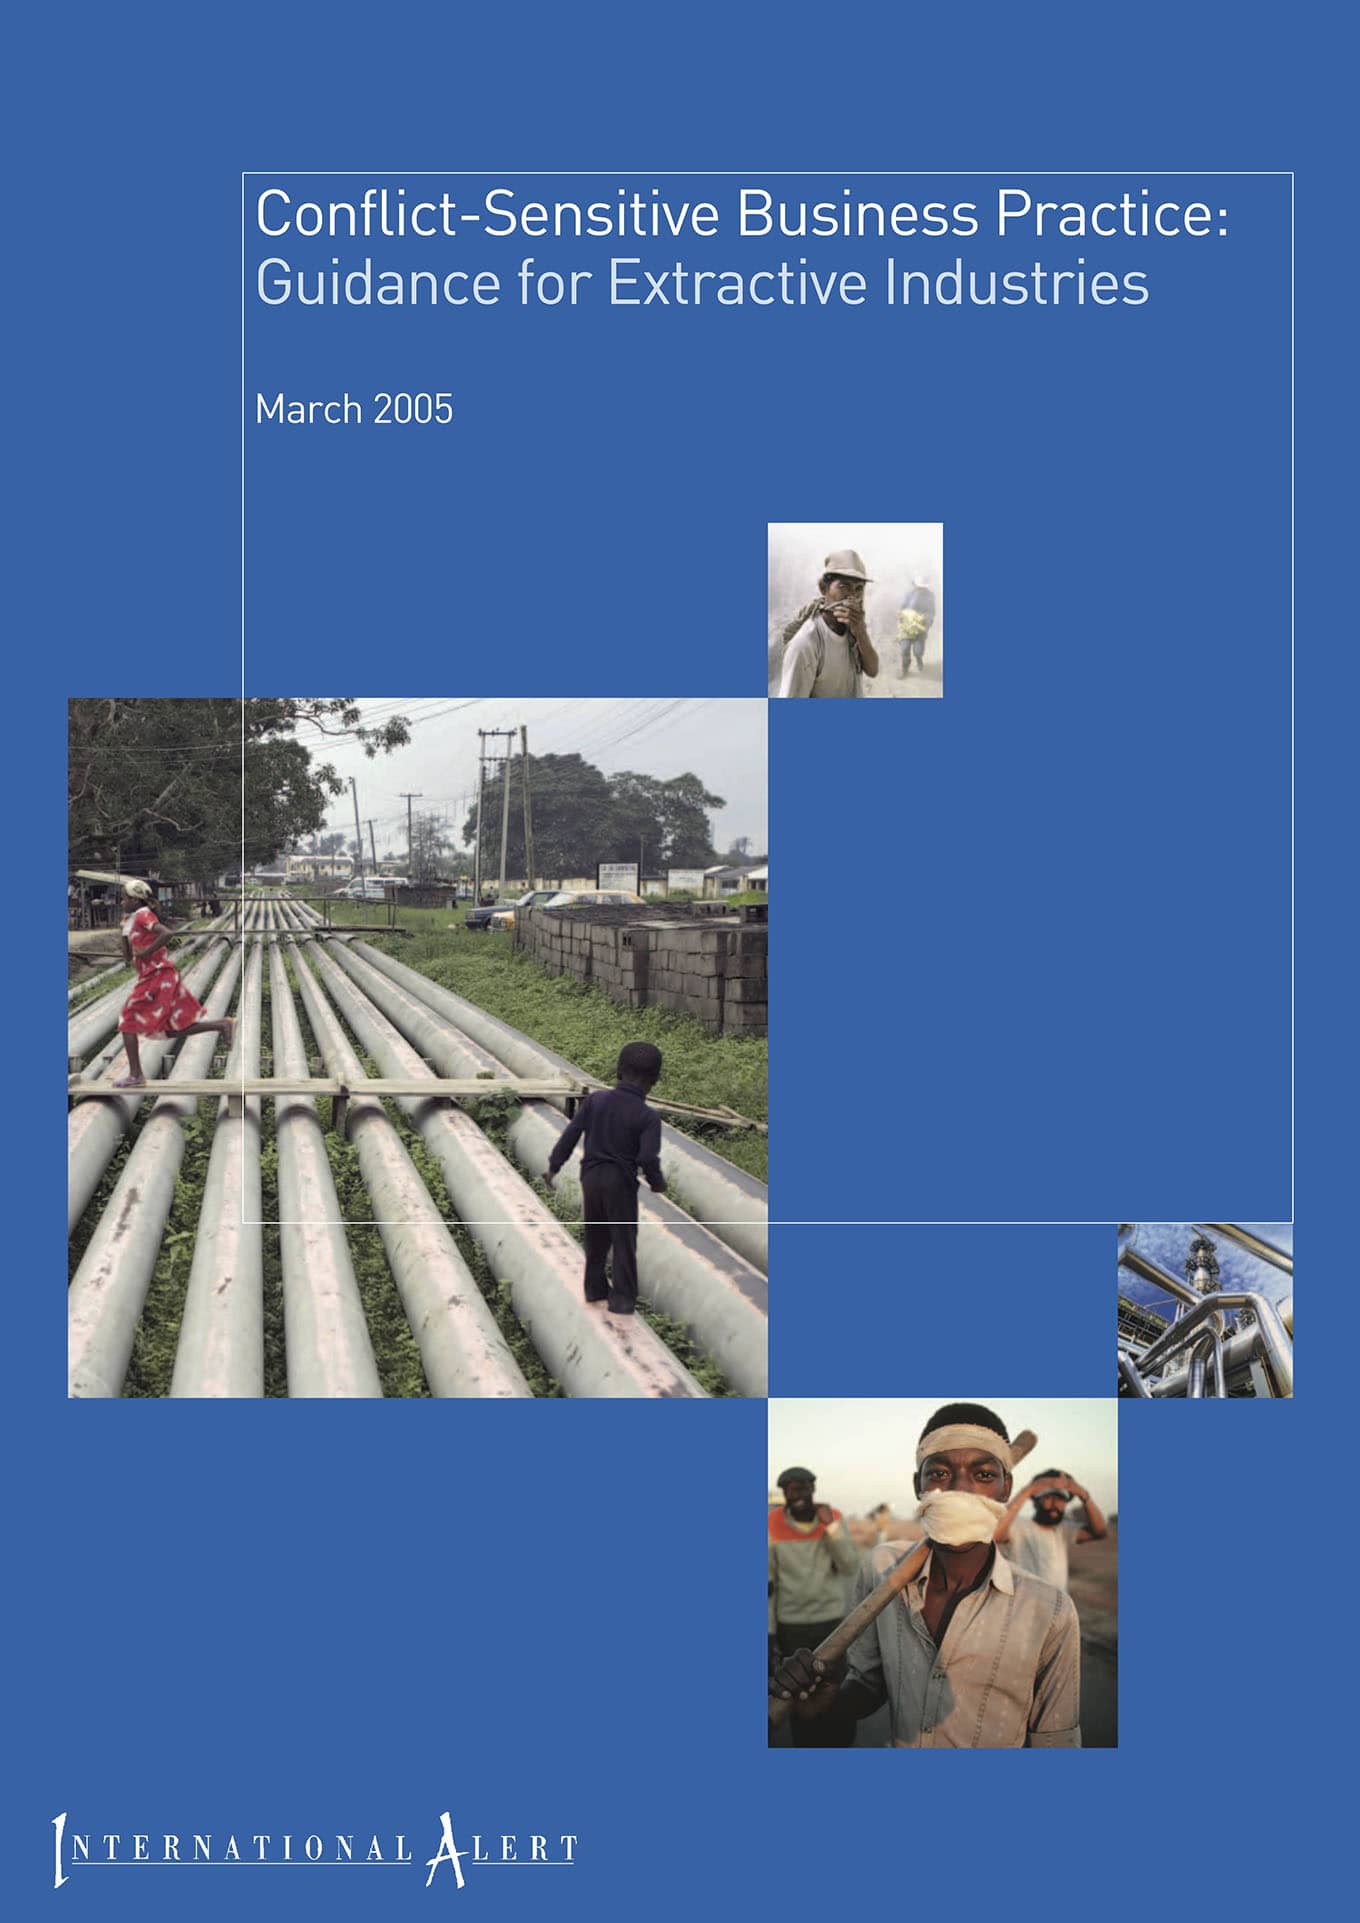 Conflict-Sensitive Business Practice: Guidance for Extractive Industries (International Alert, 2005)